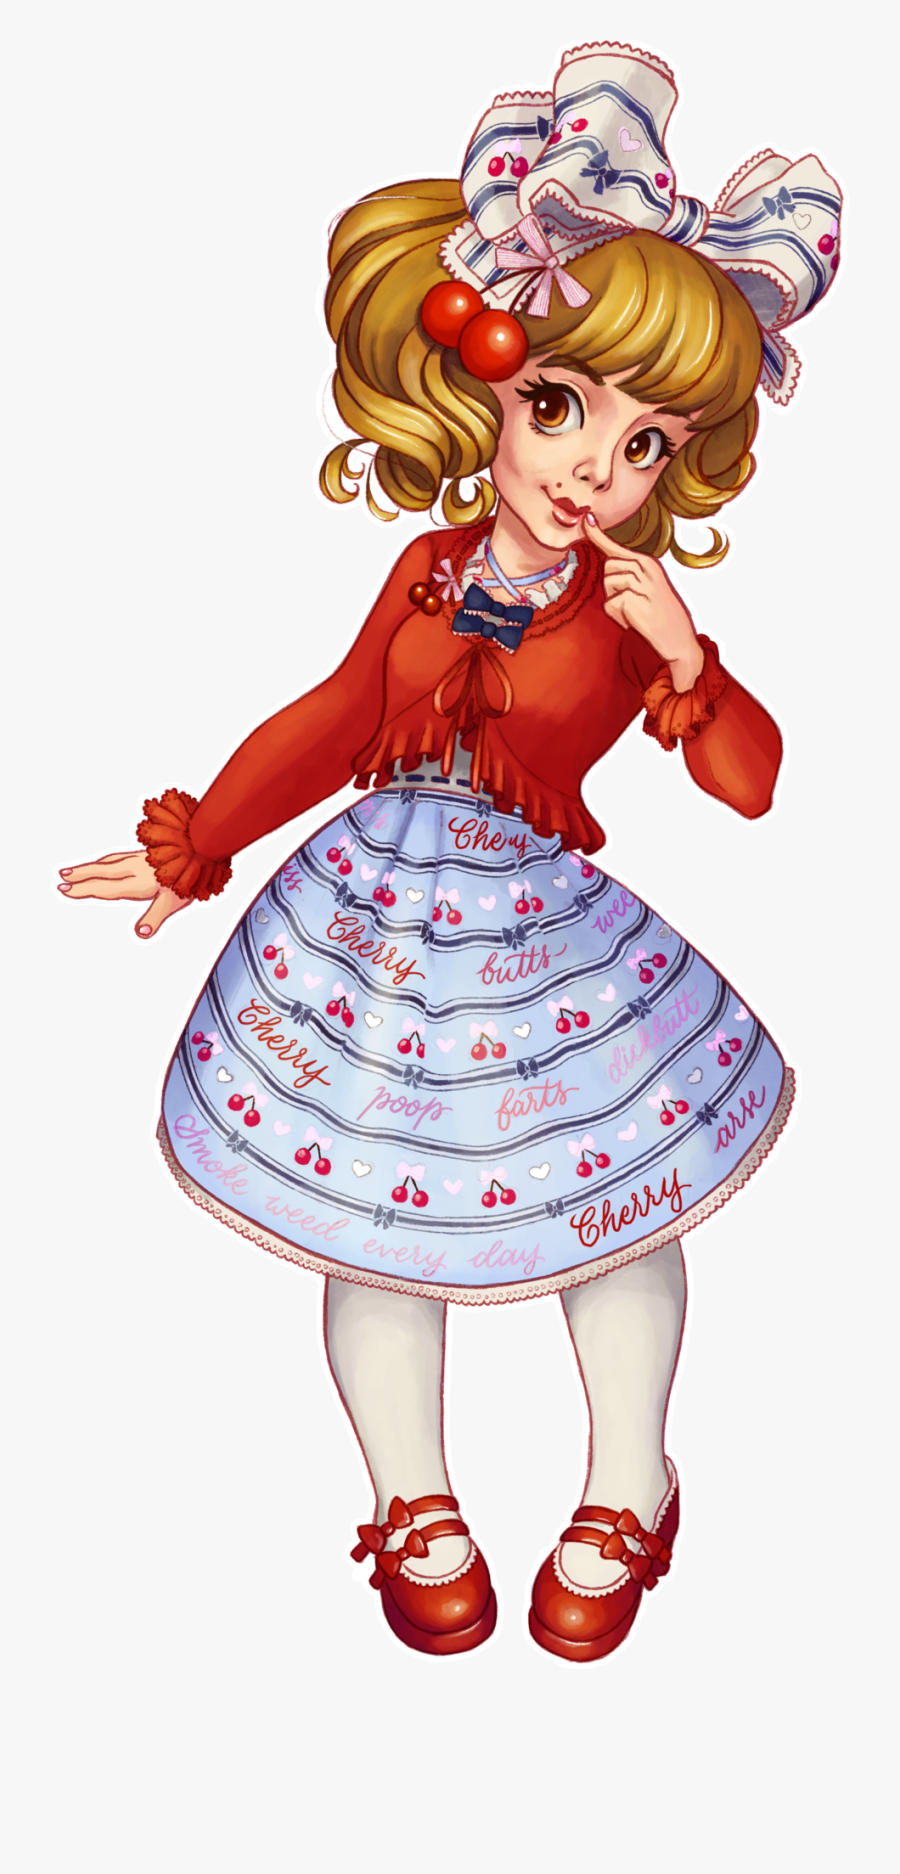 My Friend Ali In One Of Her Lolita Fashion Coordinates, - Cartoon, Transparent Clipart